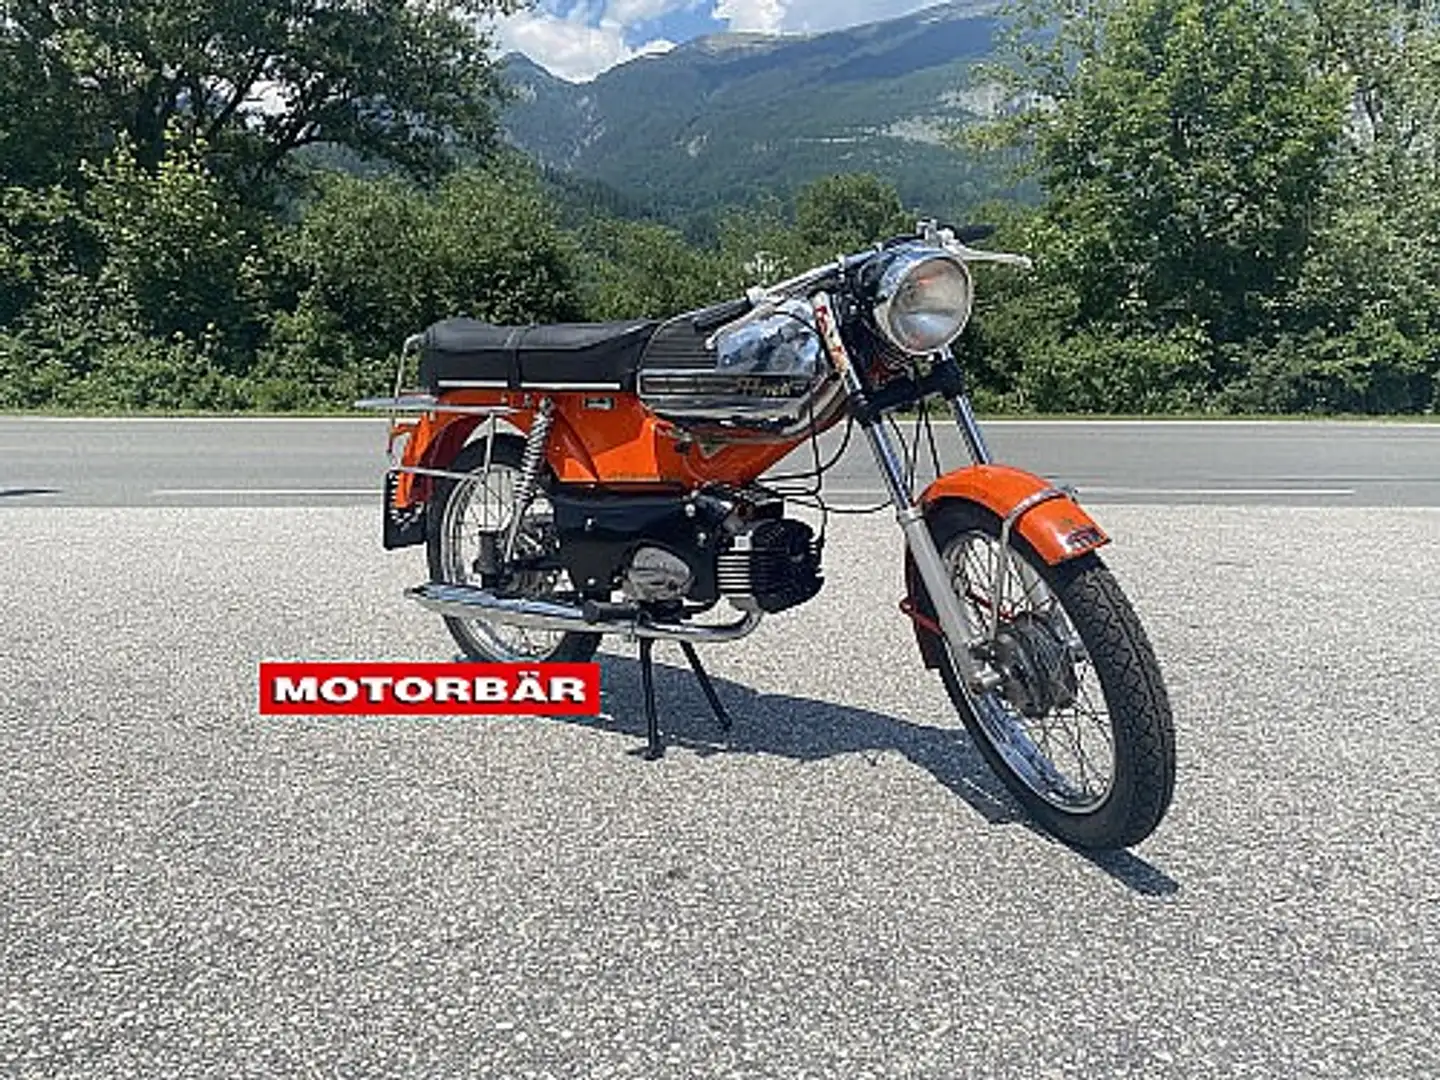 Kreidler Florett Mofa/Moped/Mokick in Orange oldtimer in Schwaz für € 6  999